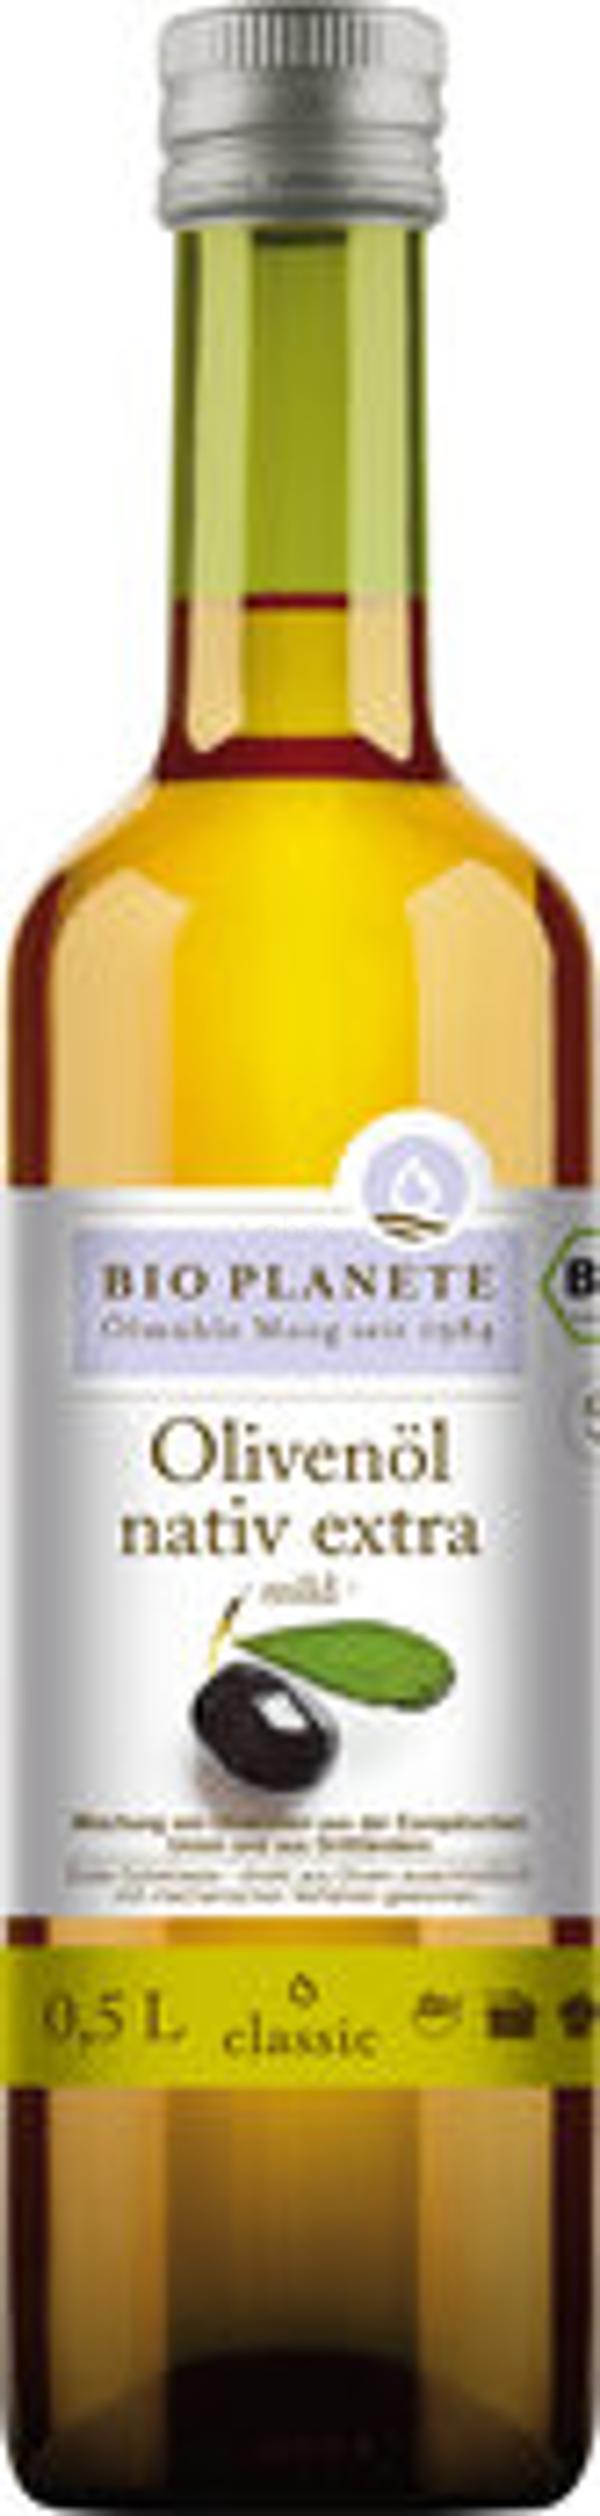 Produktfoto zu Olivenöl mild 500ml